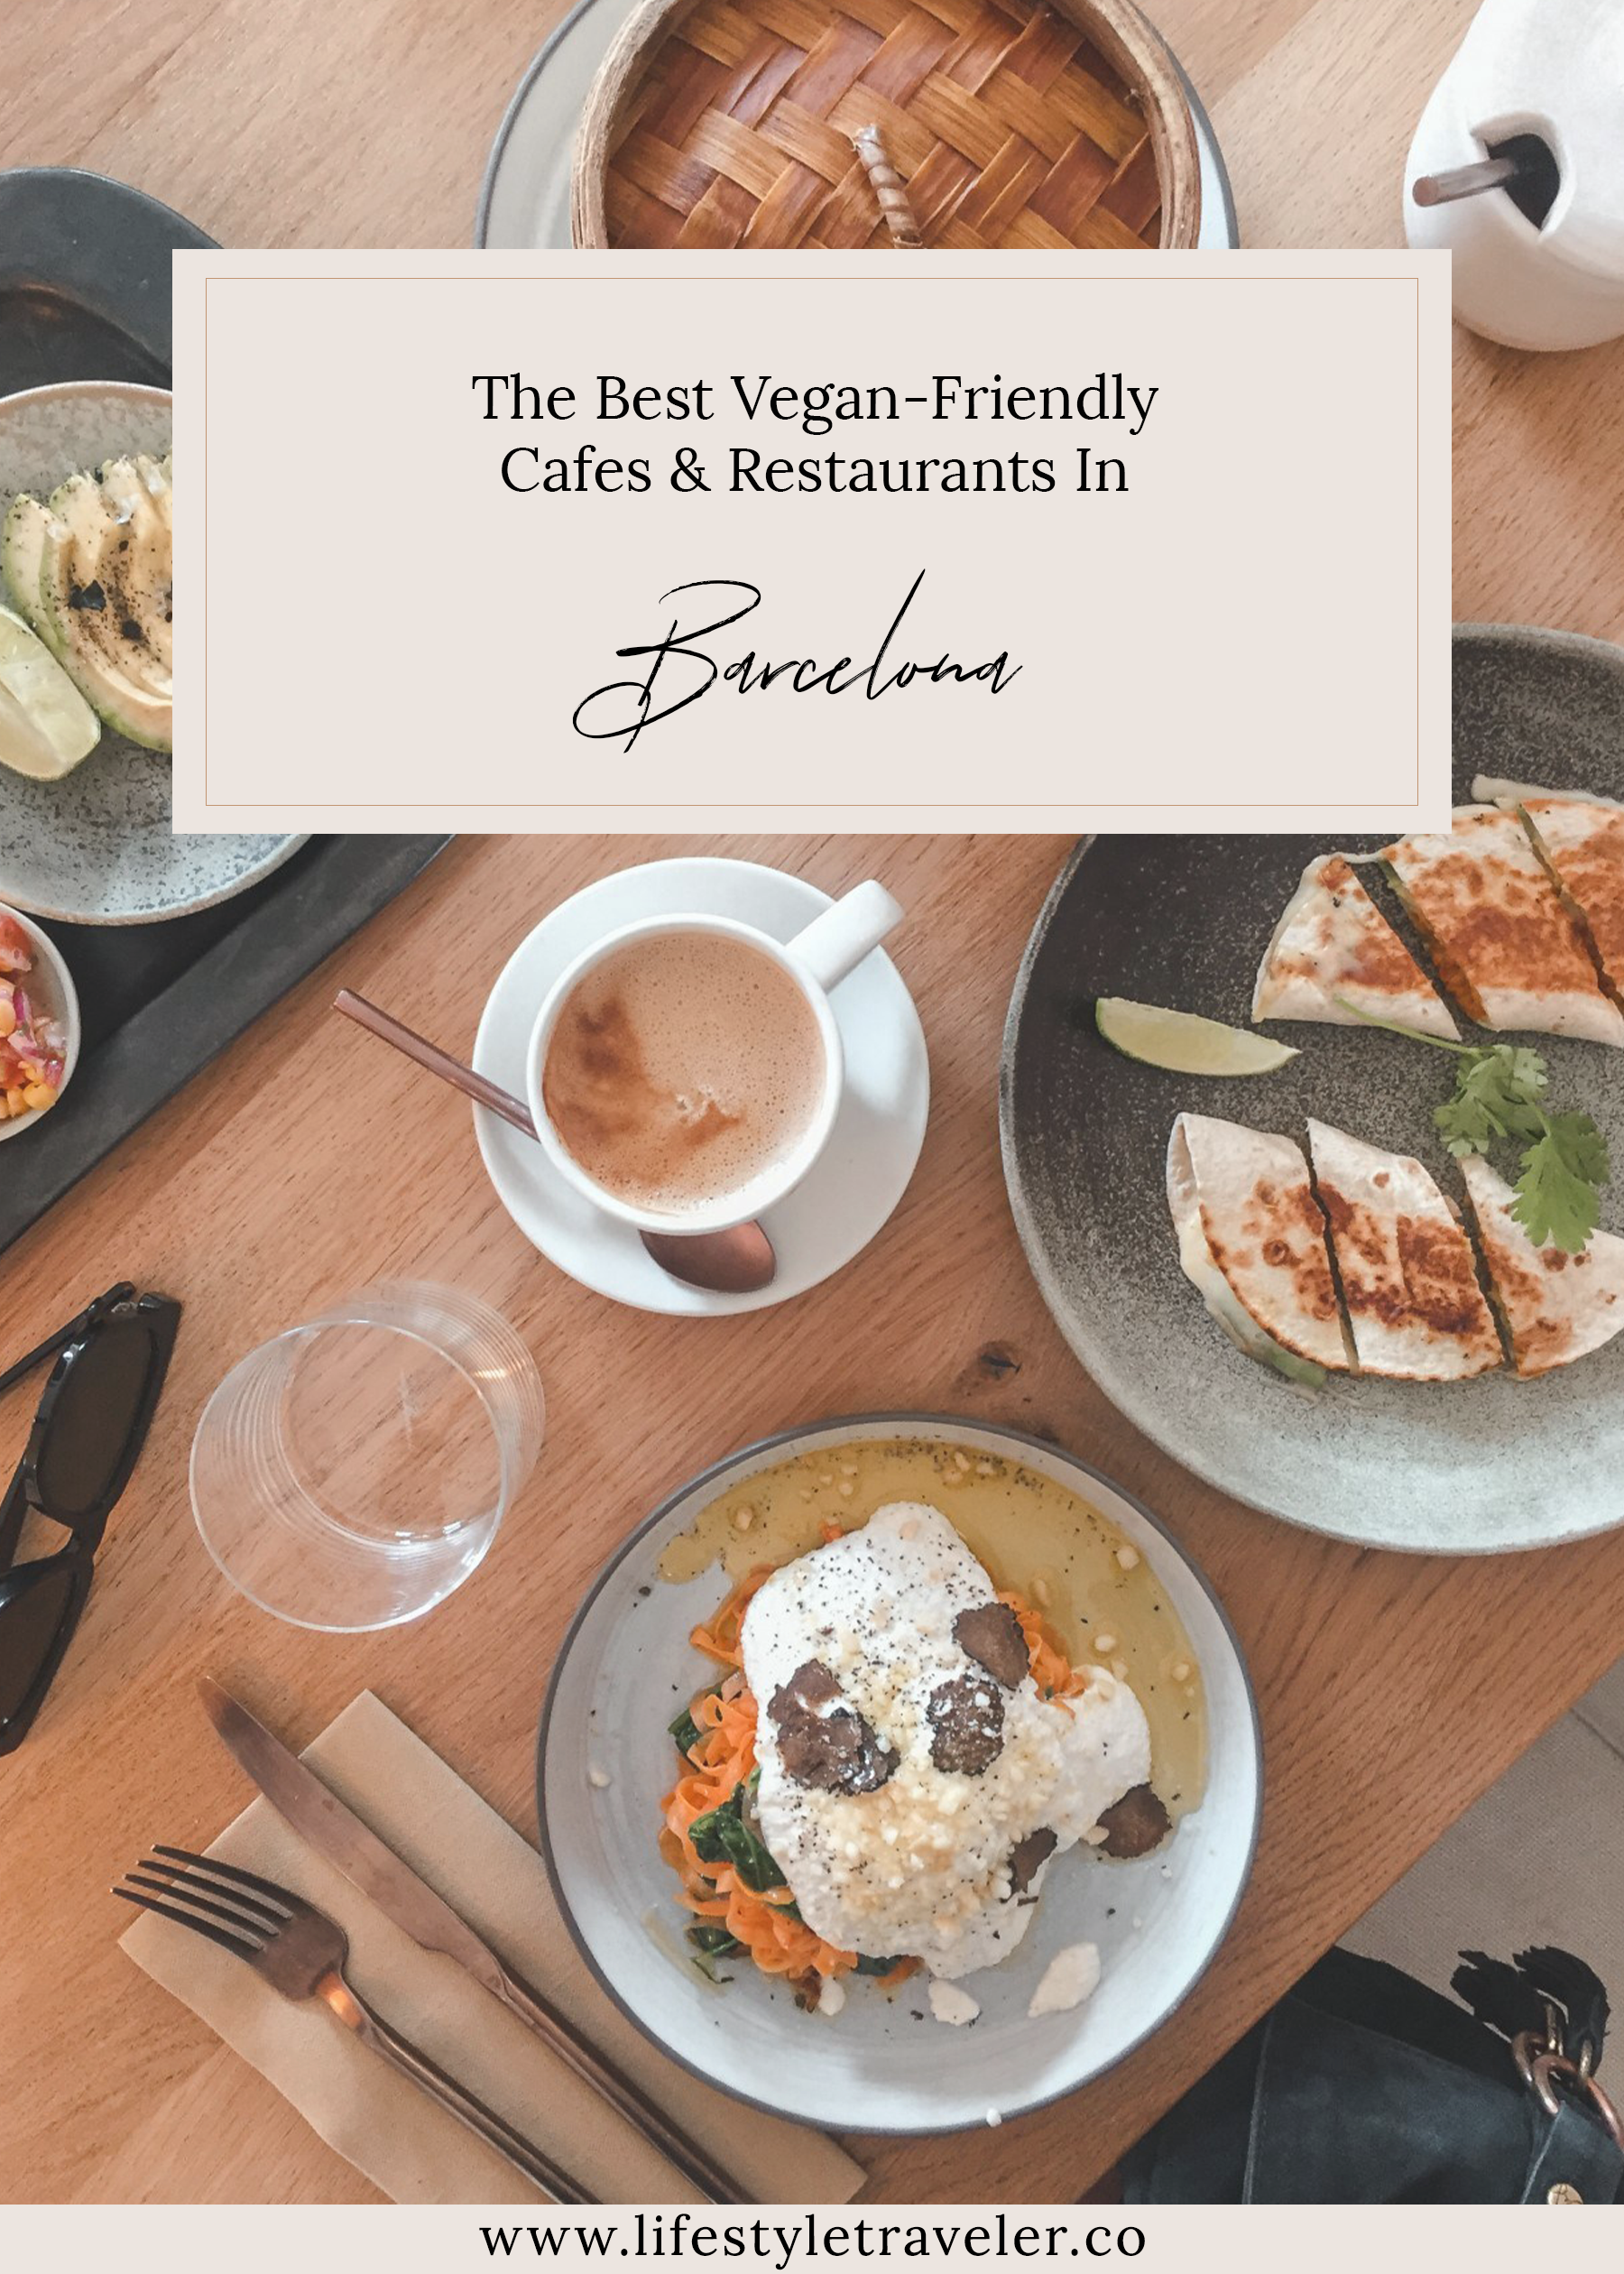 The Best Vegan-Friendly Cafes & Restaurants In Barcelona | lifestyletraveler.co | IG: @lifestyletraveler.co